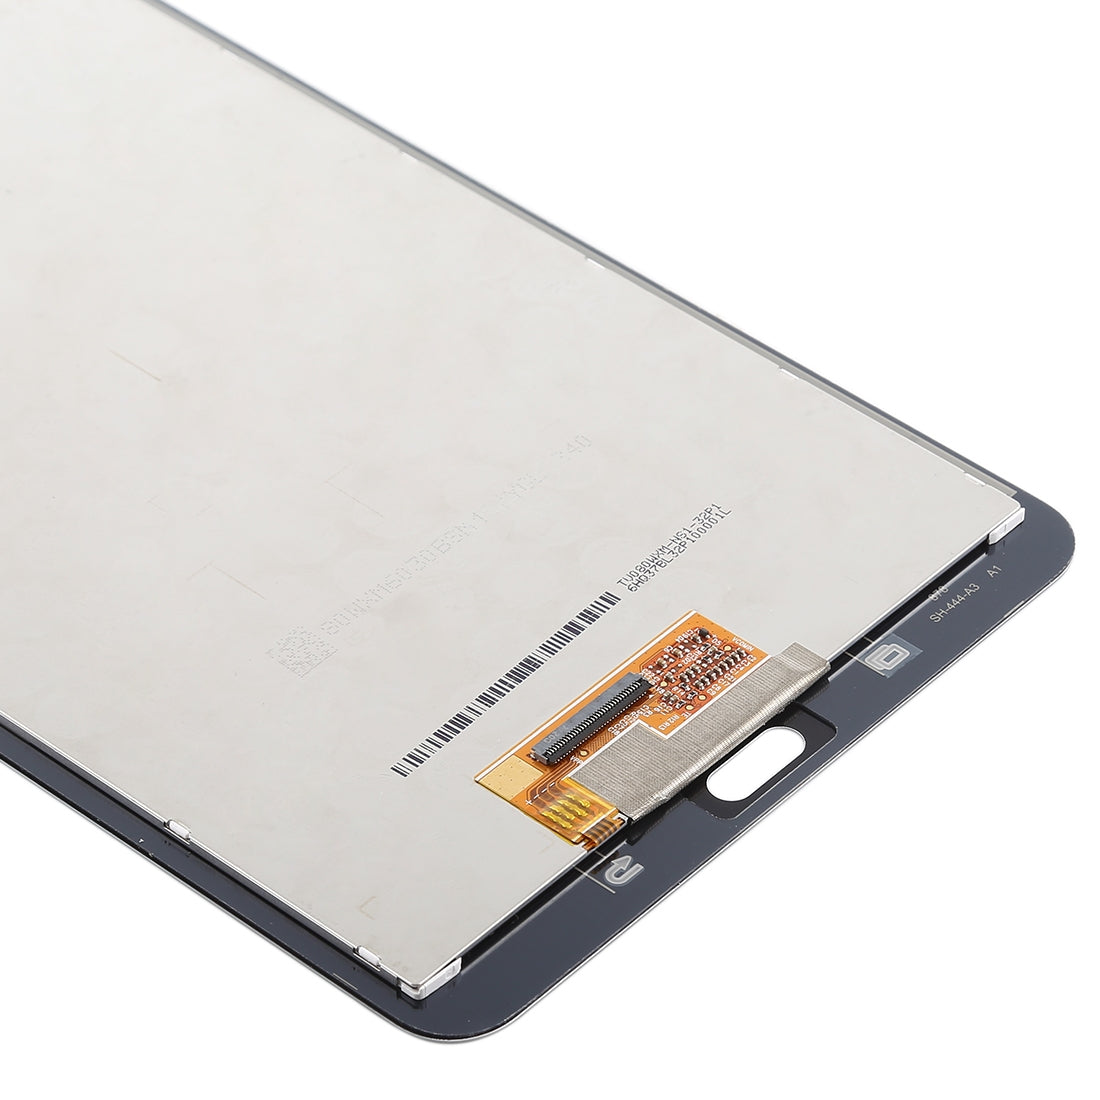 Pantalla LCD + Tactil Samsung Galaxy Tab E 8.0 T377 (Versión Wifi) Blanco